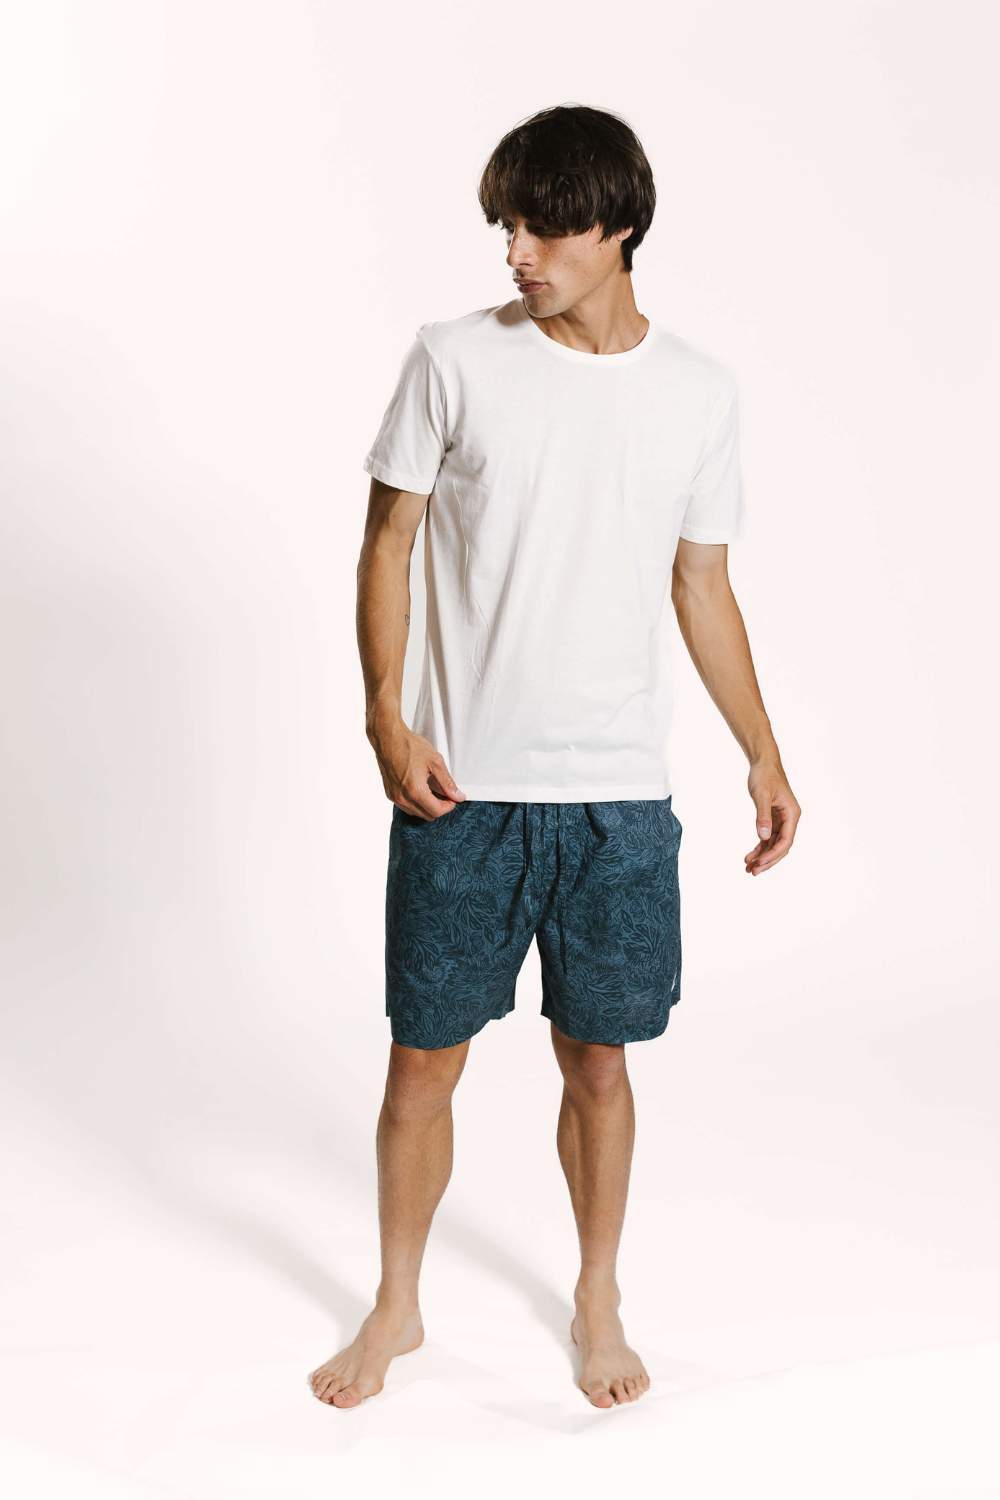 Mens sleepwear shorts set in an organic cotton midnight garden print